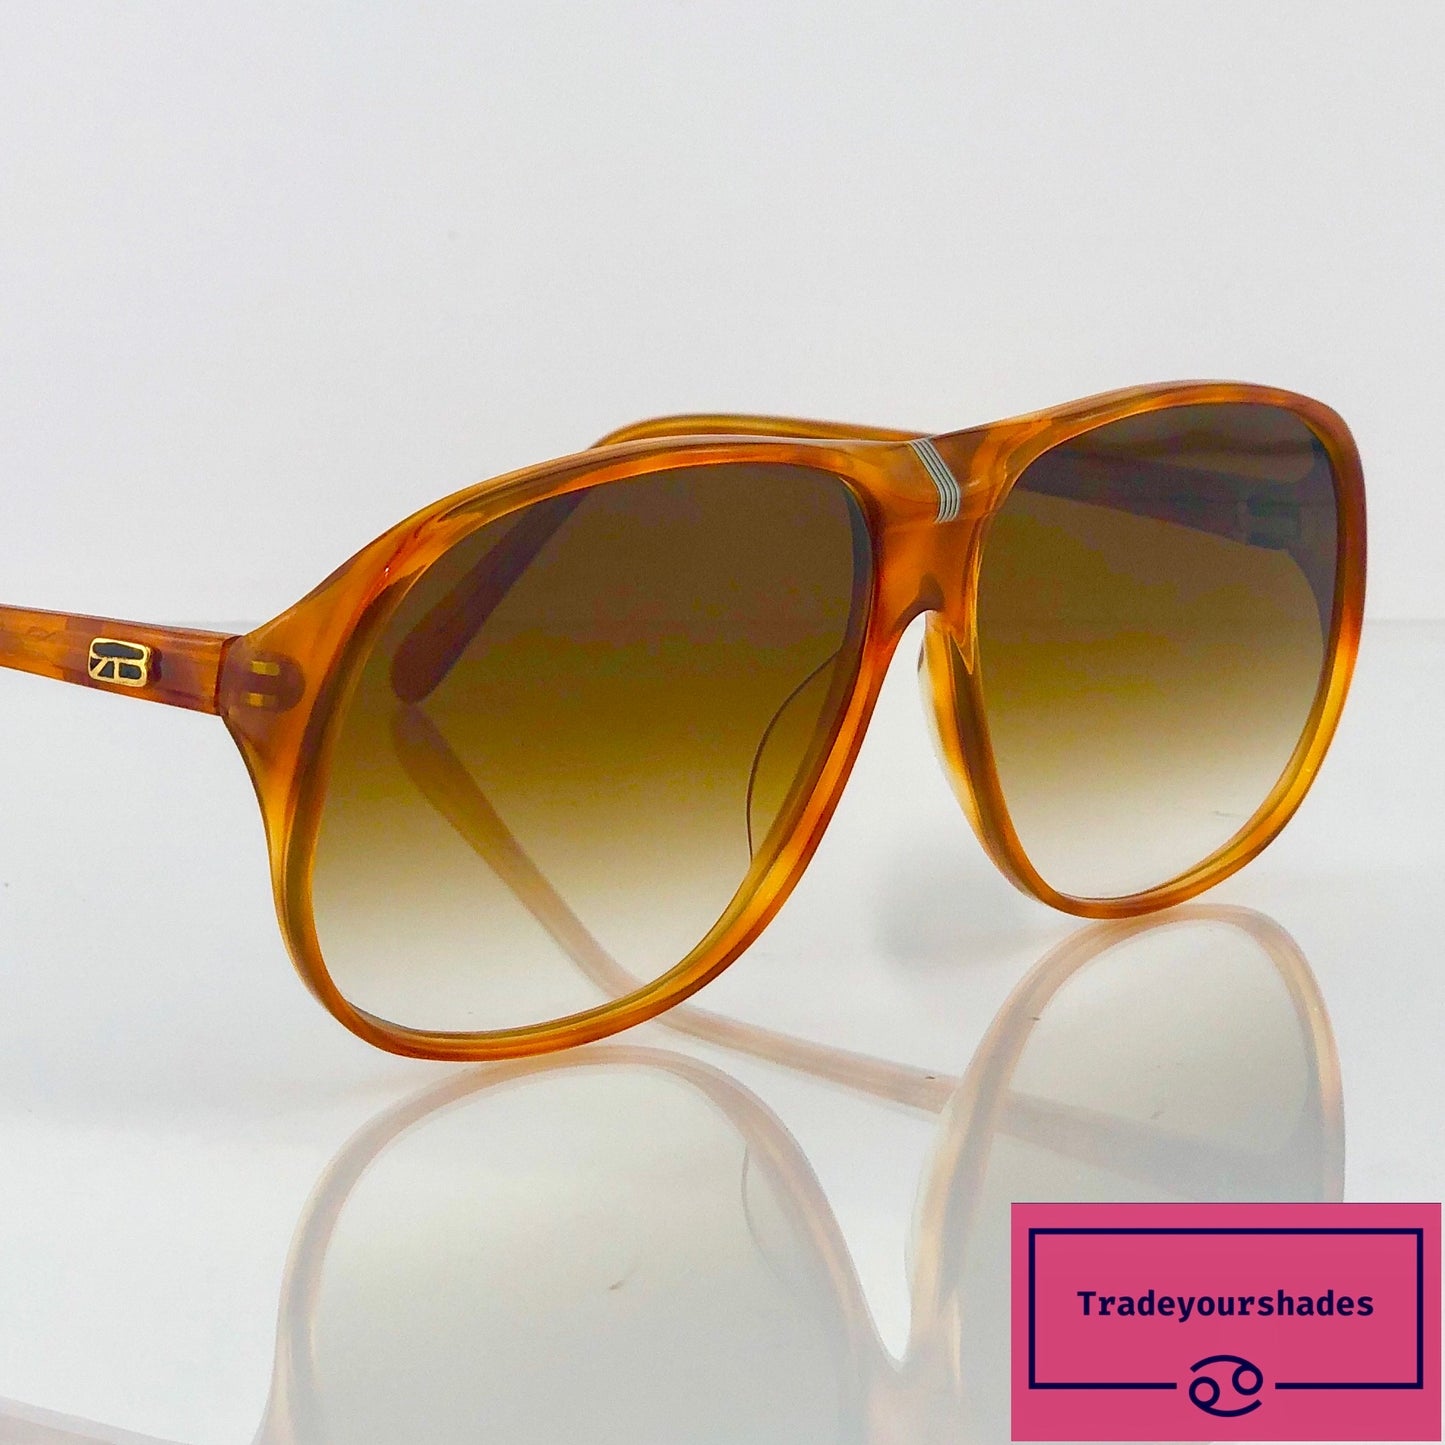 Renato Balestra Colosseo RB400 Vintage Sunglasses 80's | Tradeyourshades.